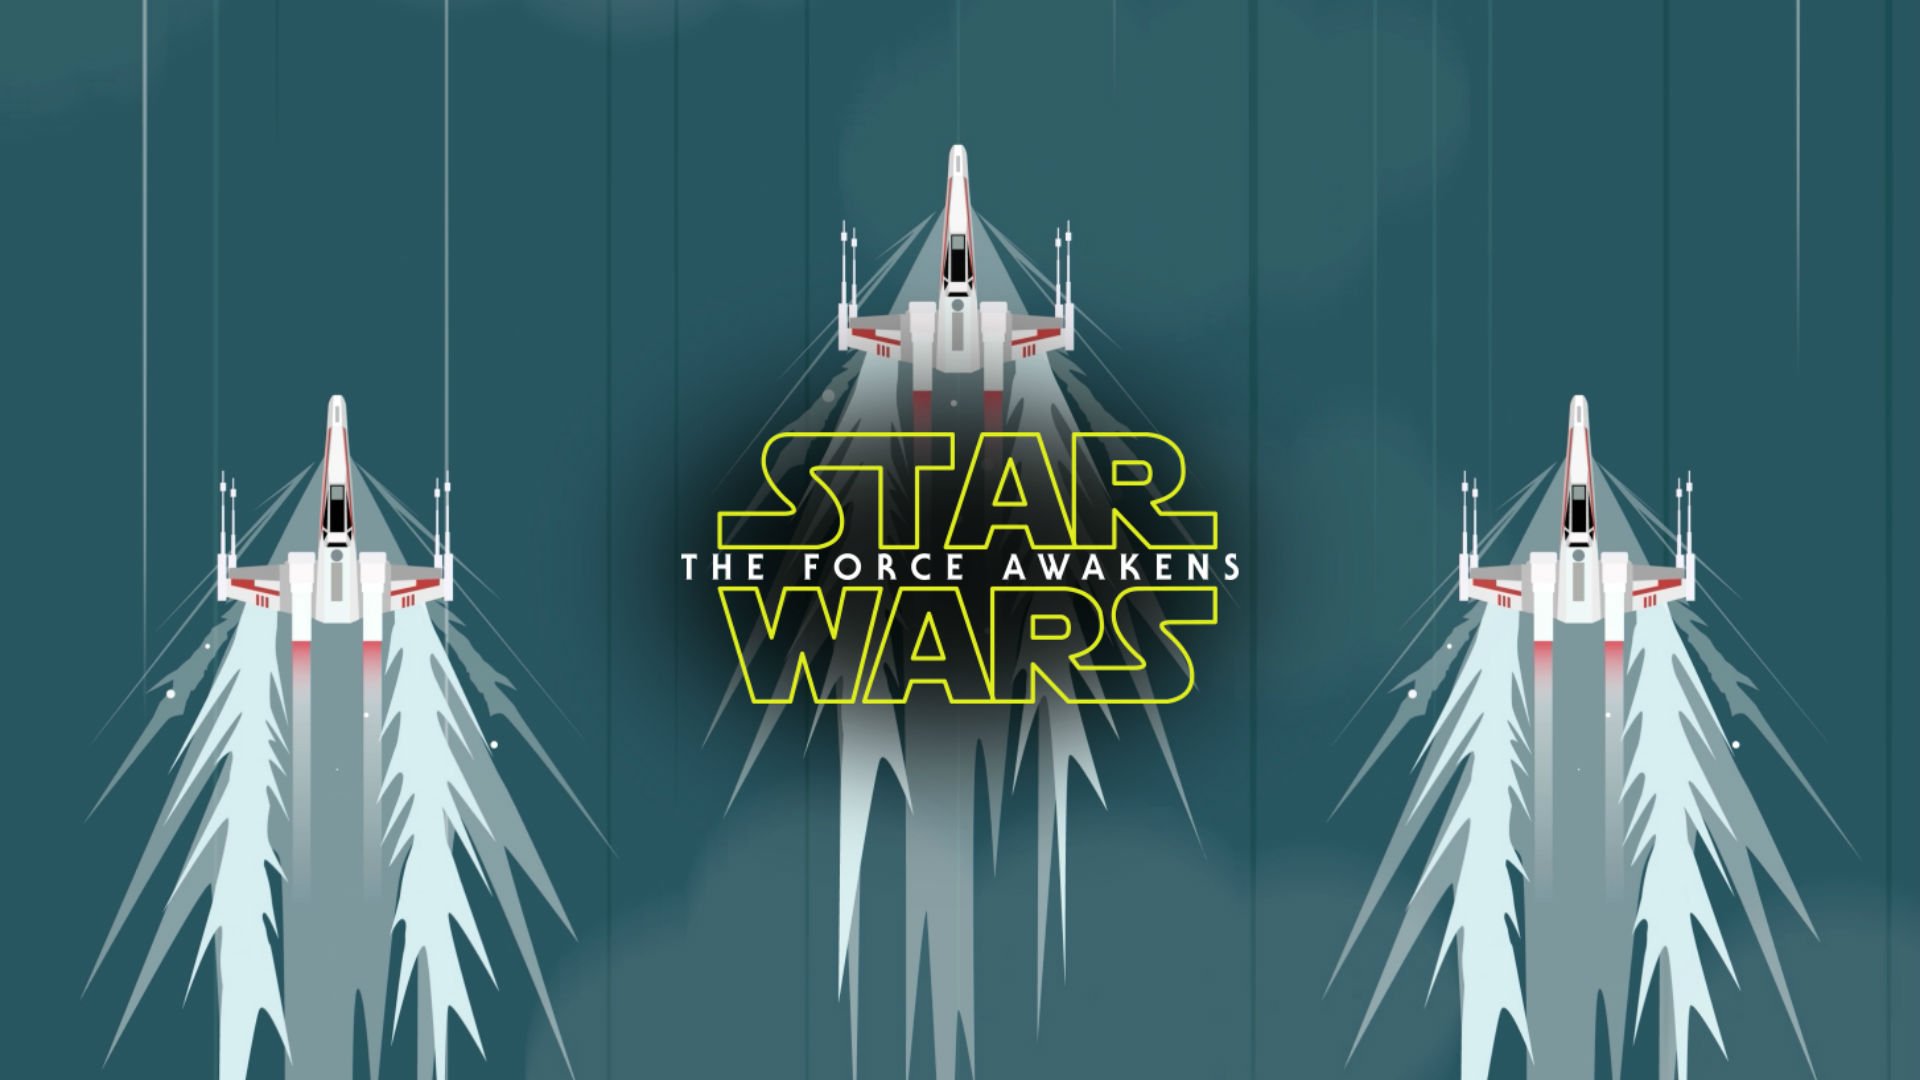  sci fi 1star wars force awakens spaceship poster wallpaper background 1920x1080